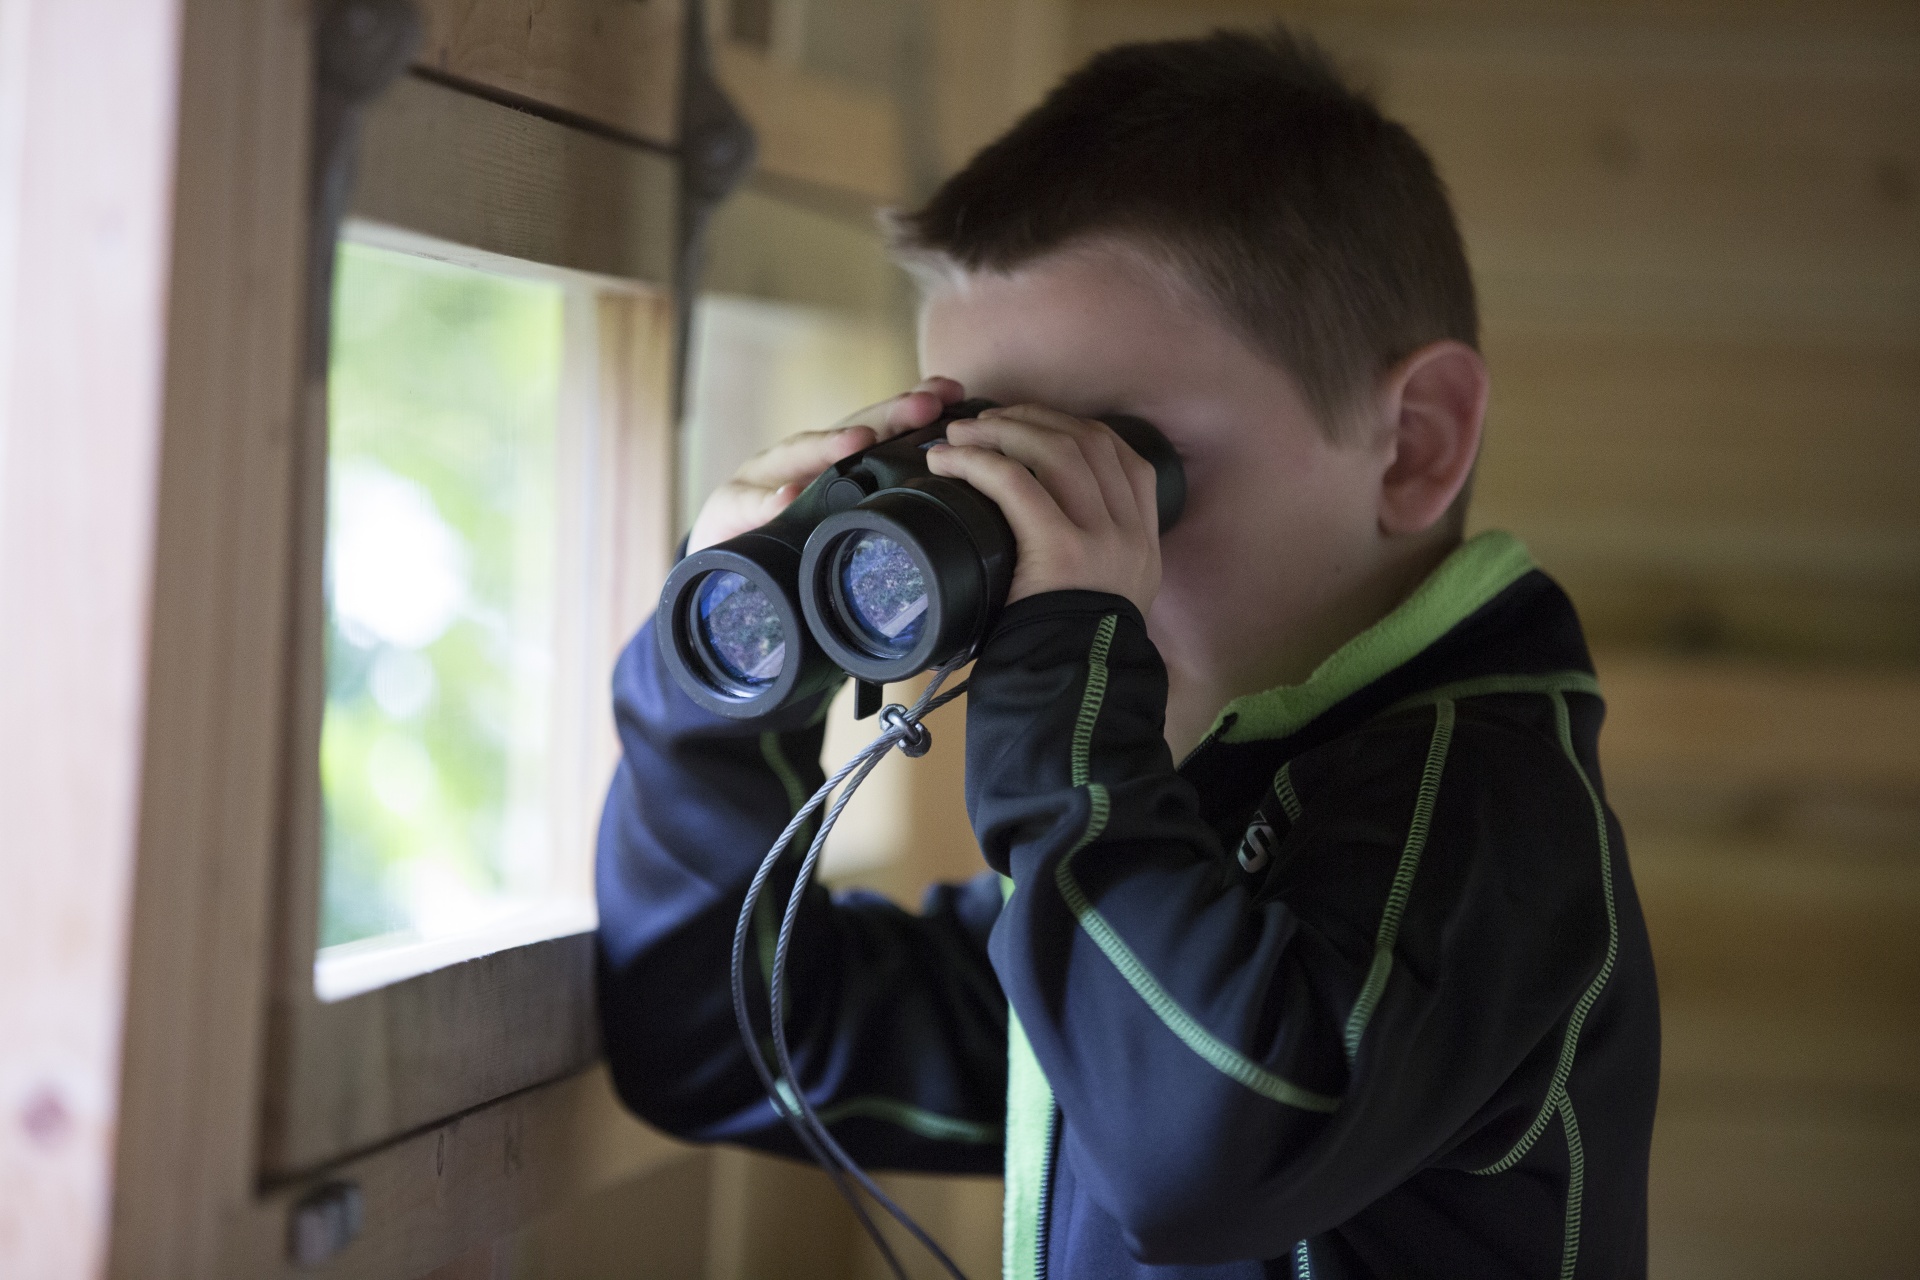 Boy Looks Through Binoculars